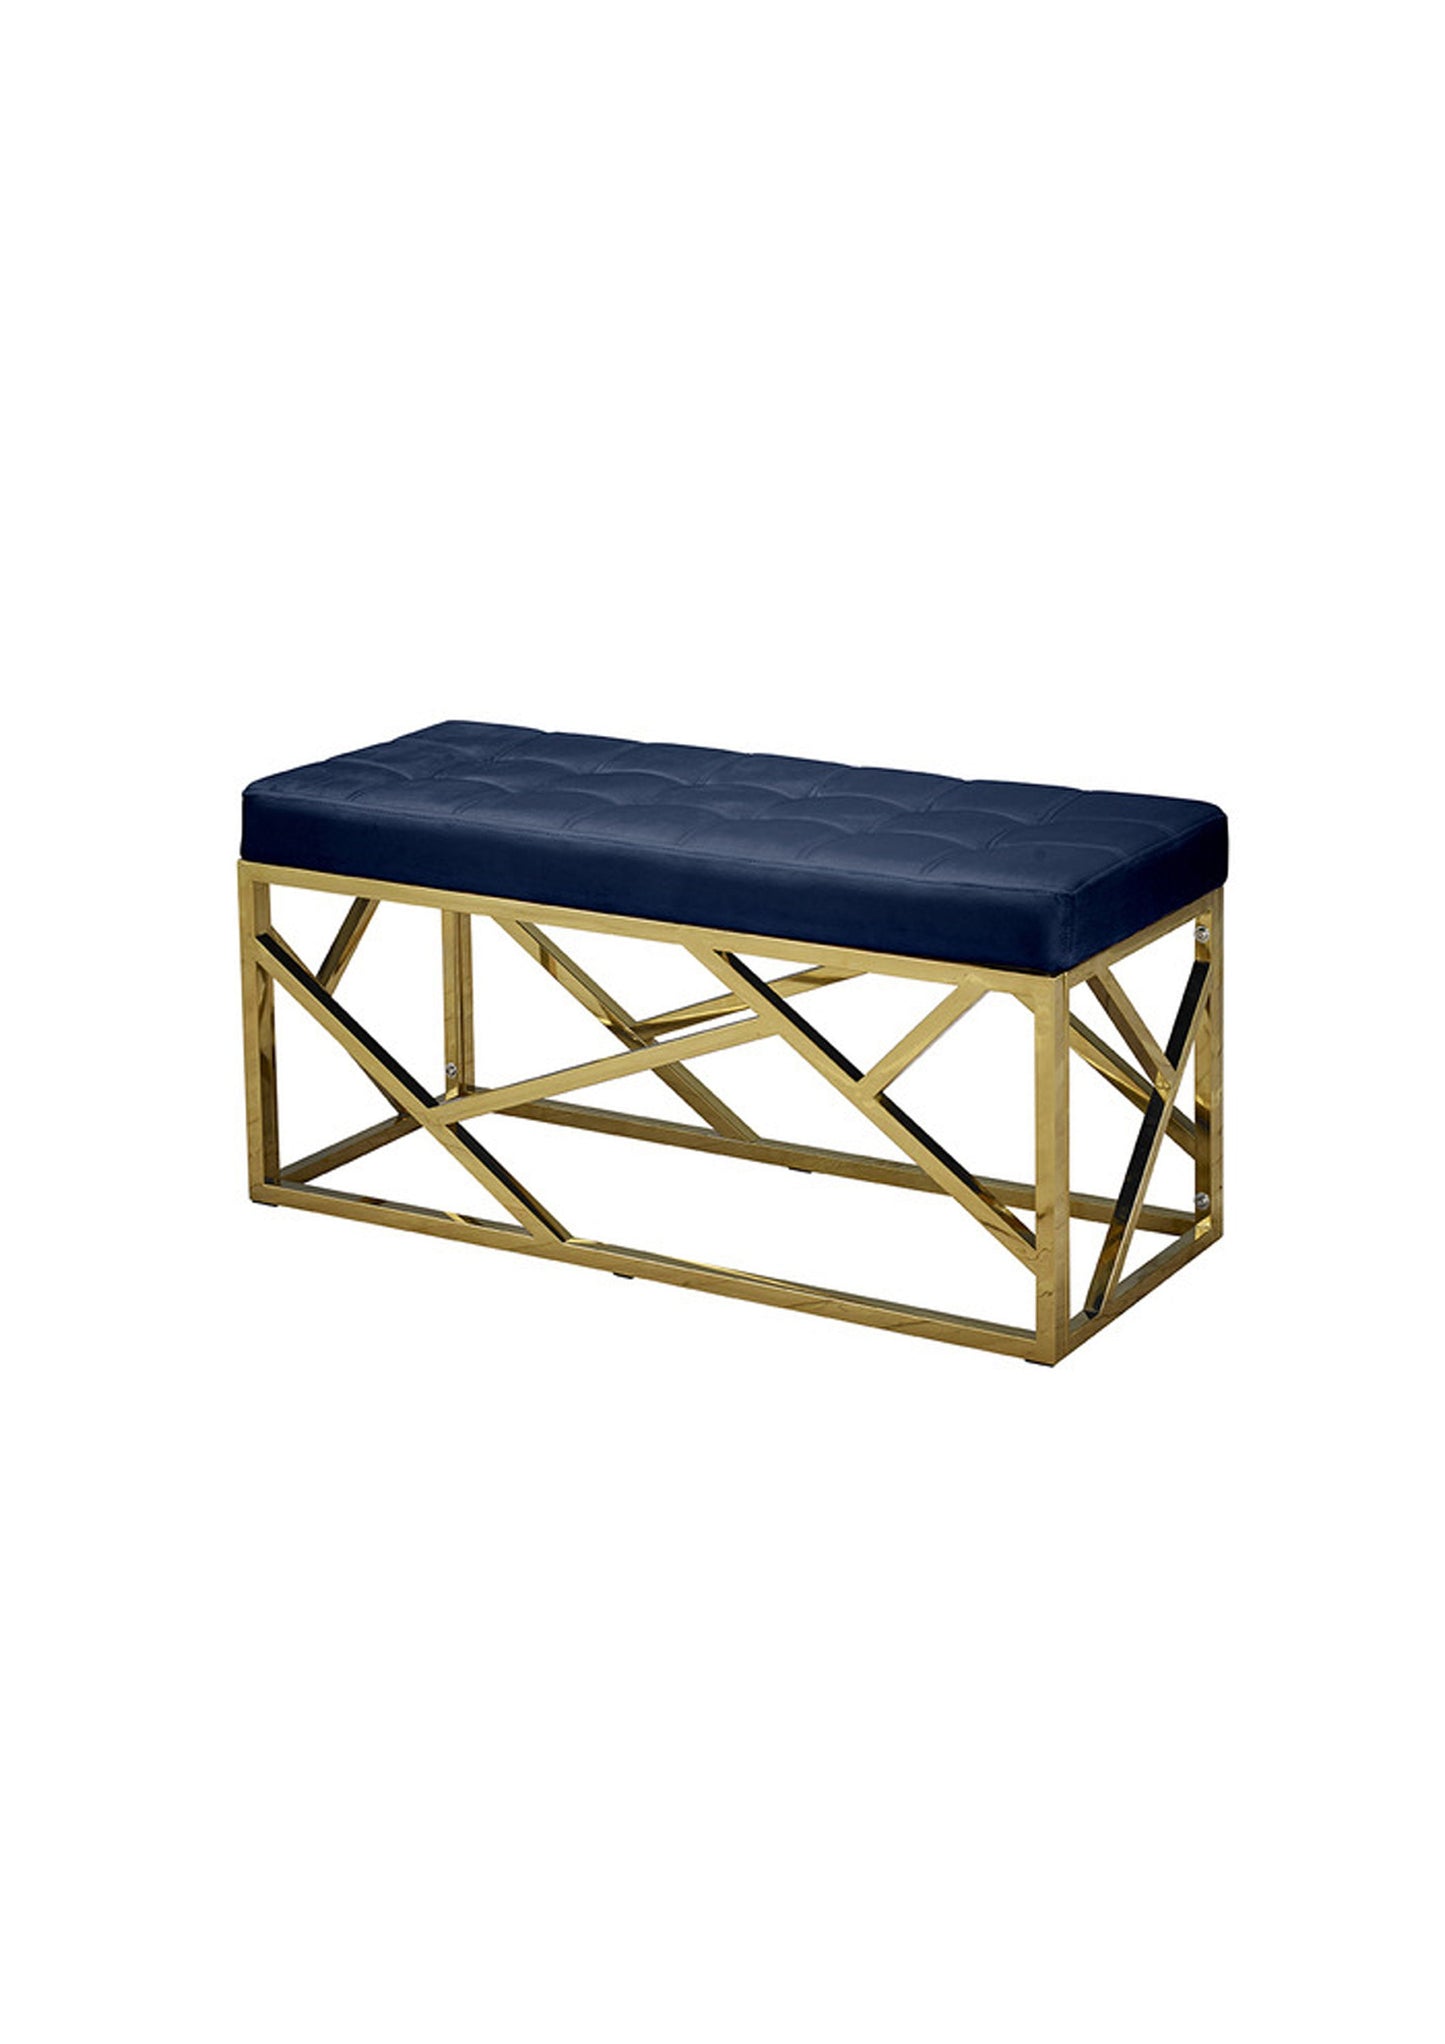 NEW Elegant Stylish Velvet and Gold Bench Seating MANY COLOURS - Pink/Blue/ Green/ Mink/ Black